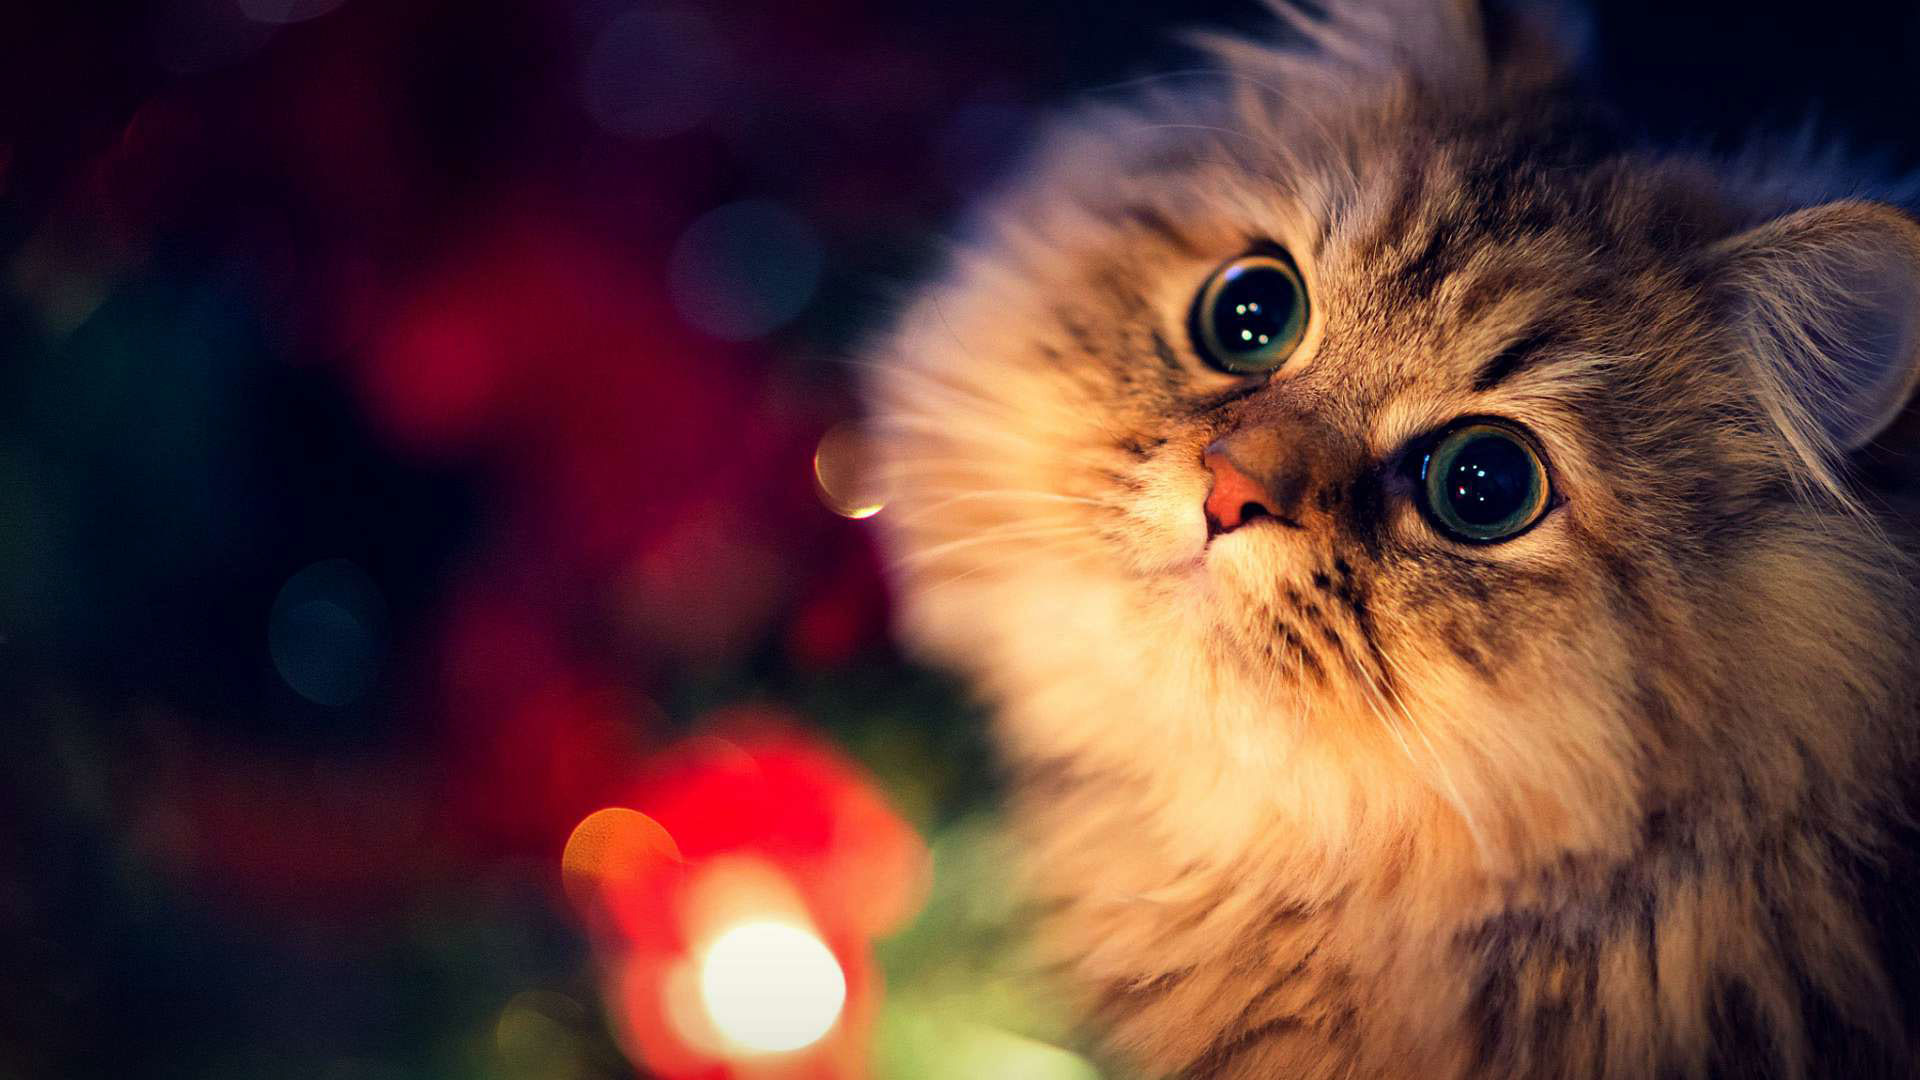 Hd Pics Photos Stunning Cute Cat Christmas Lights Beautiful Hd Quality Desktop Background Wallpaper 1920x1080